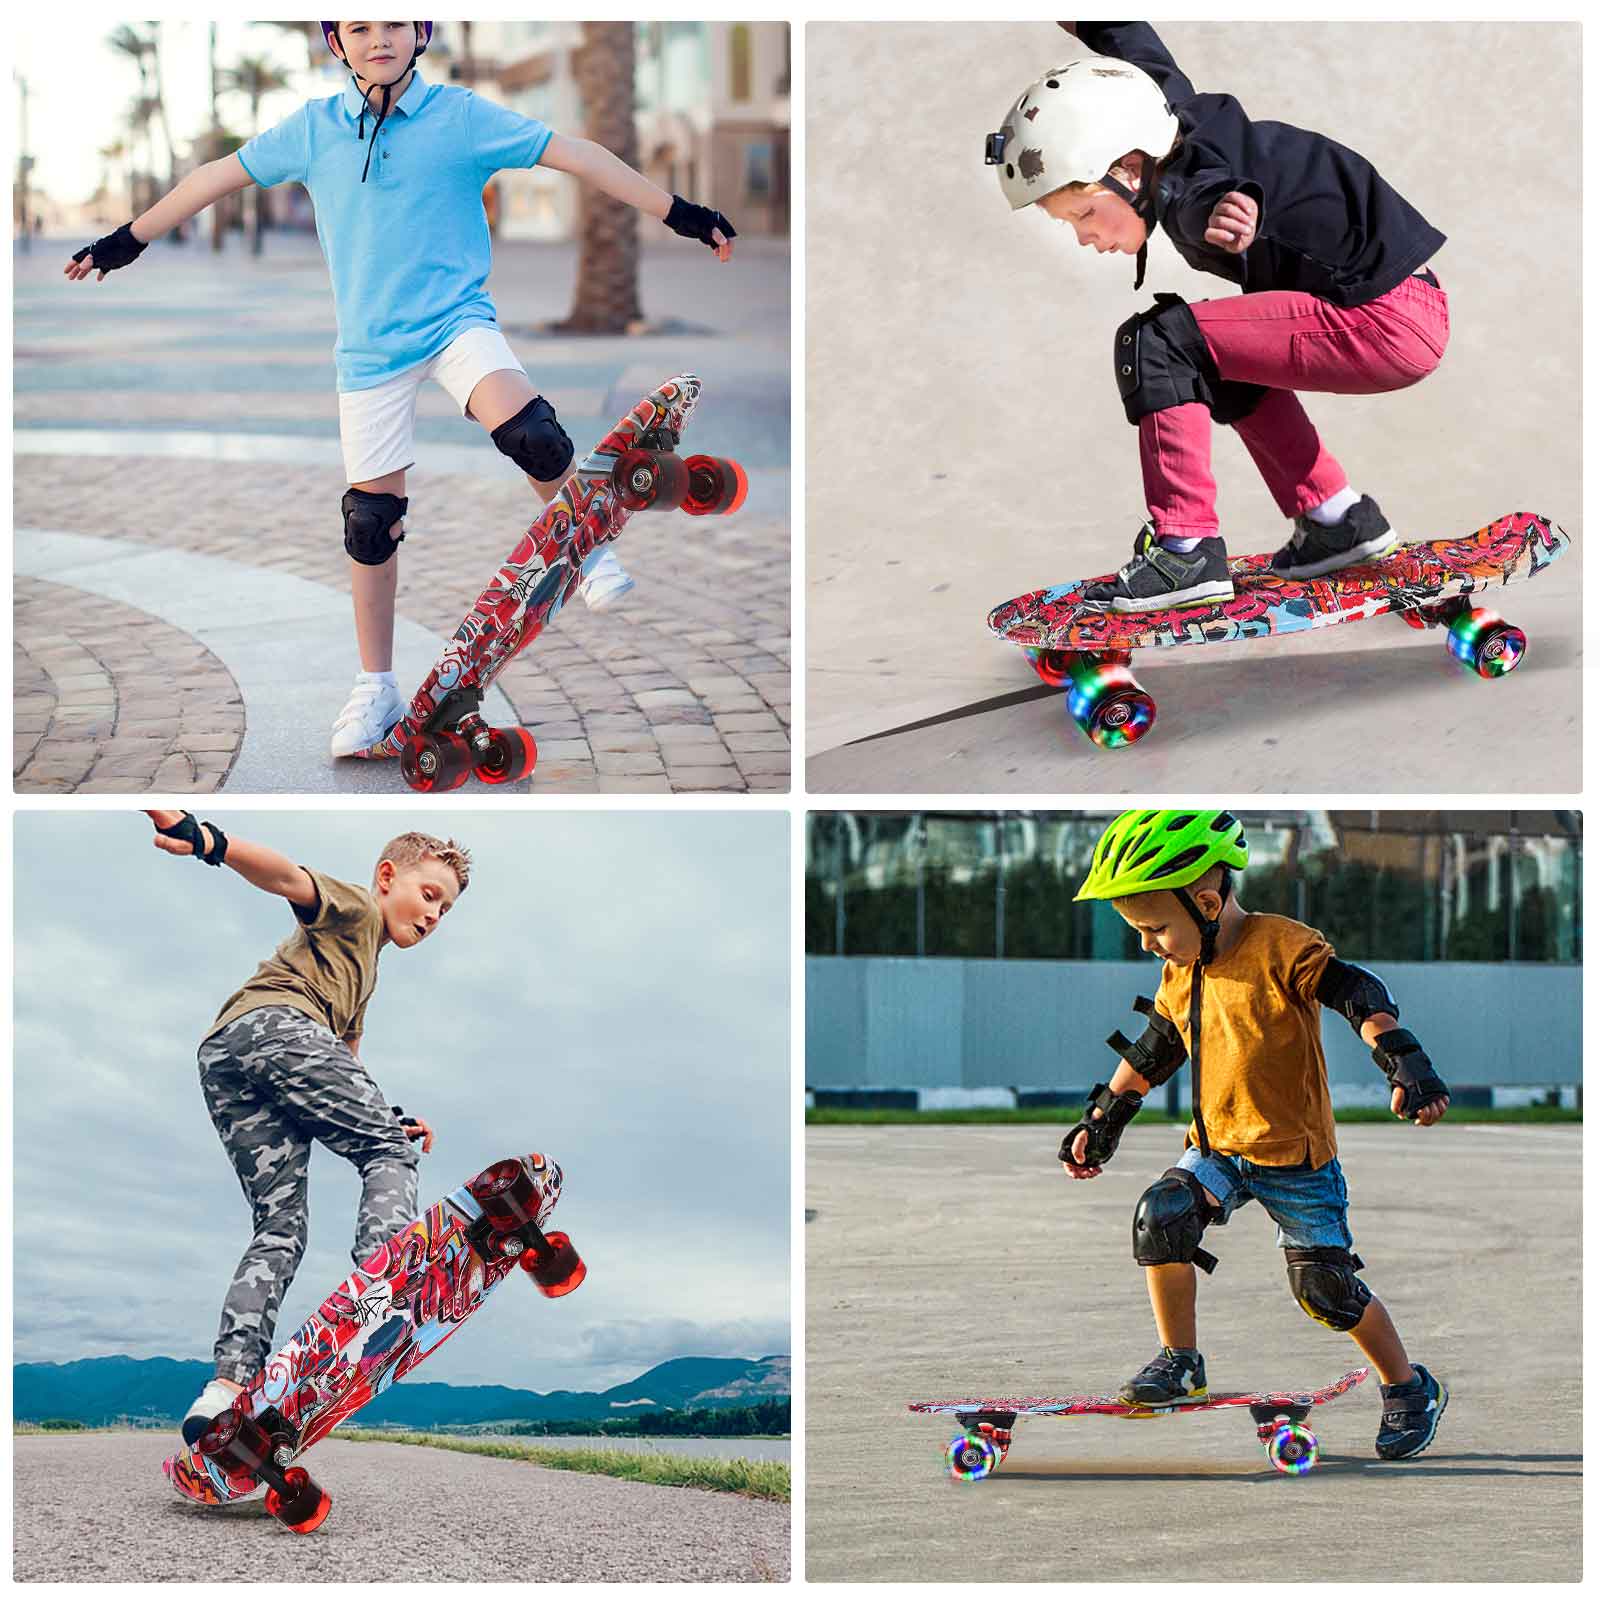 22" Mini Skateboards Kids Sport Long-board with LED Wheels for Children Beginners